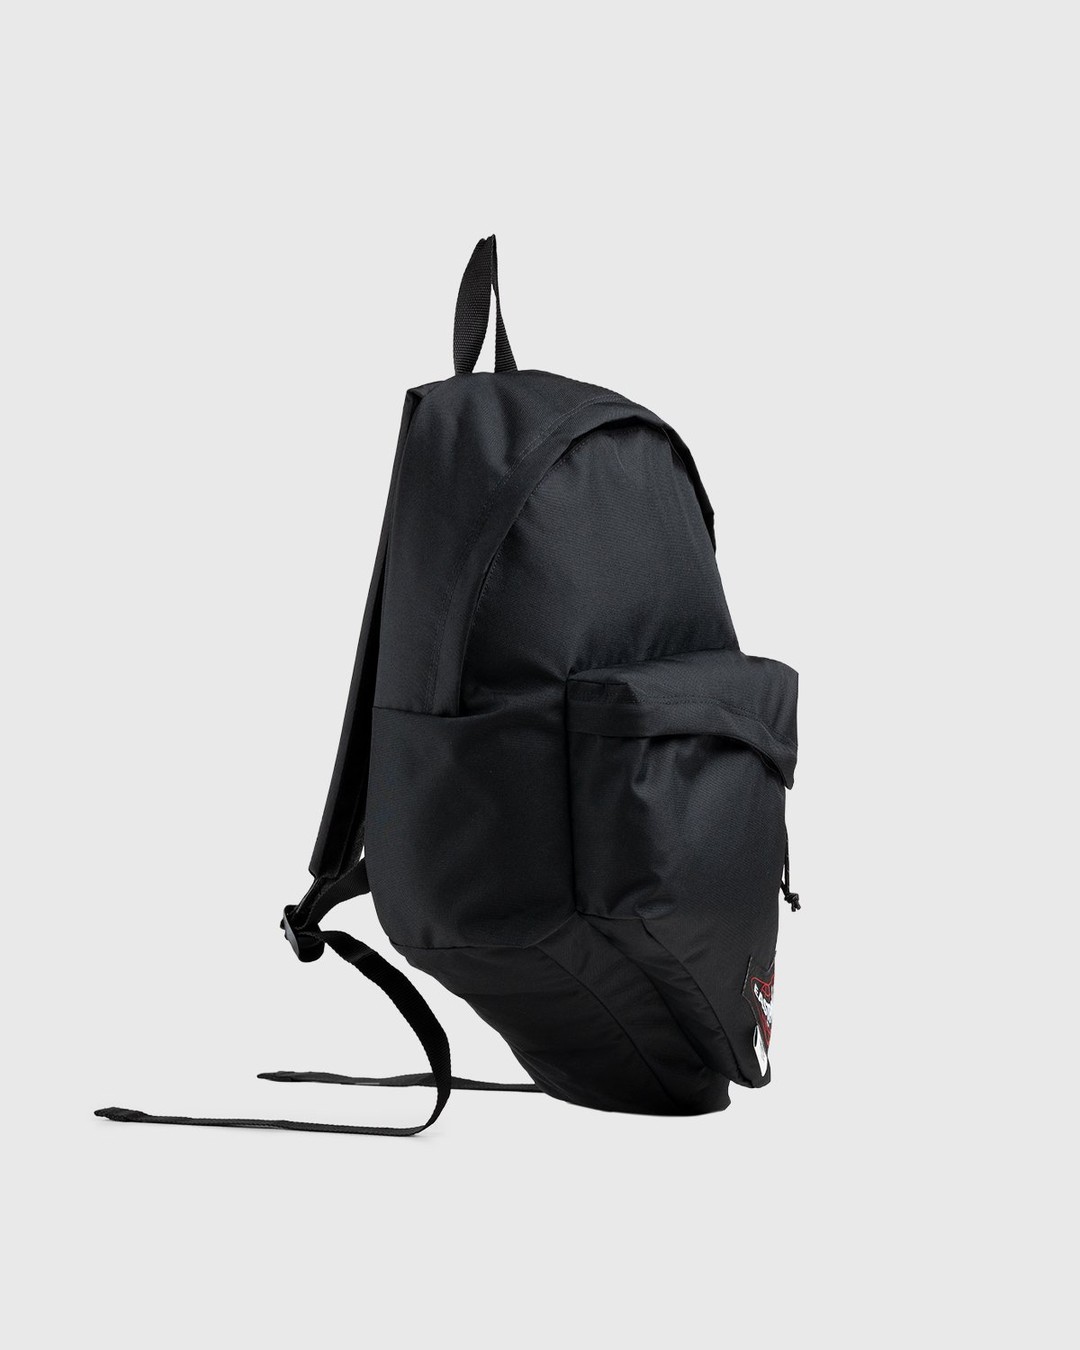 MM6 Maison Margiela x Eastpak – Zaino Backpack Black - Bags - Black - Image 2